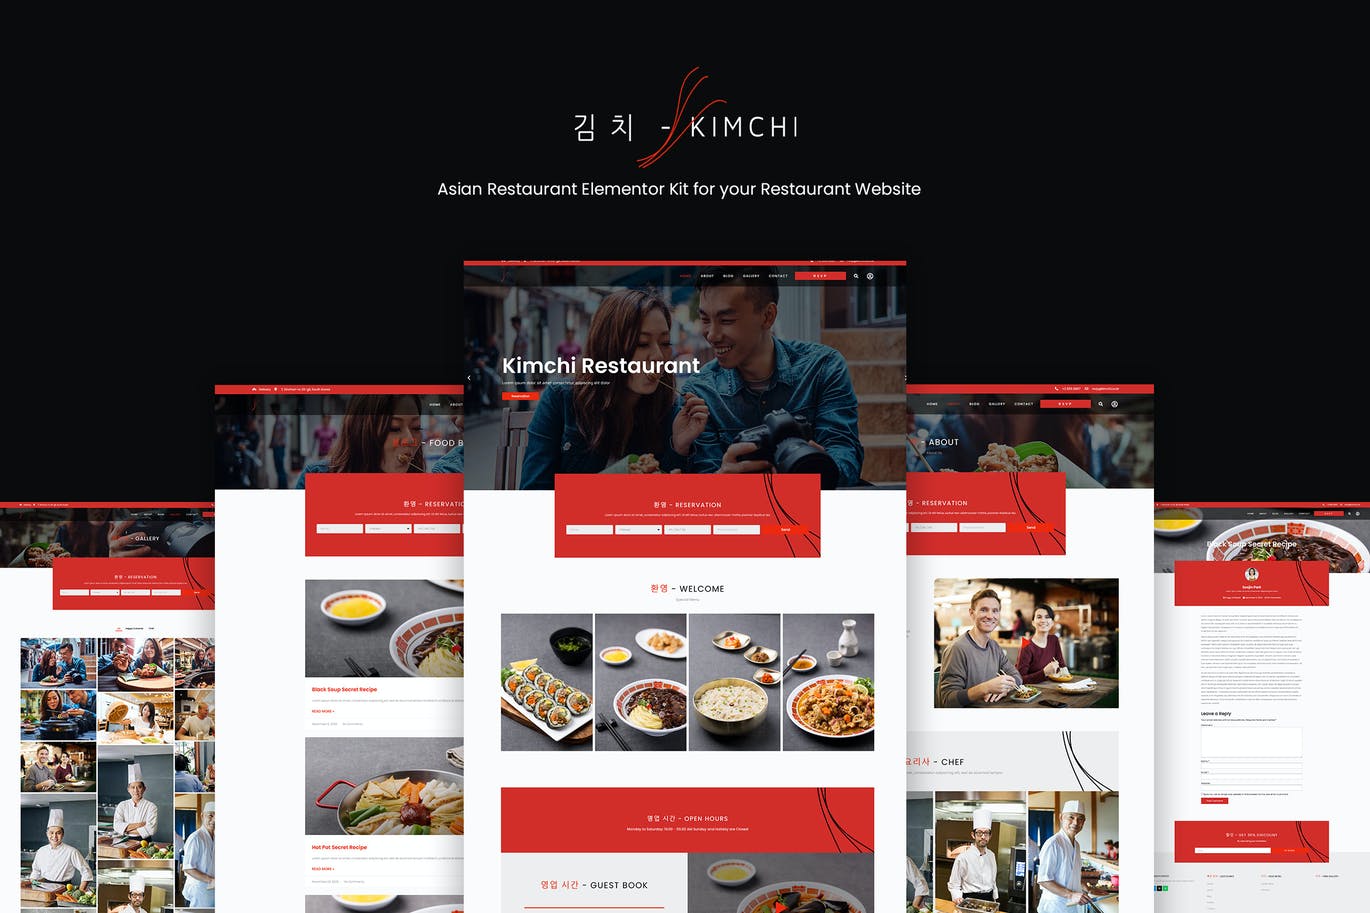 Kimchi – 亚洲餐厅和咖啡馆 Elementor Template Kit